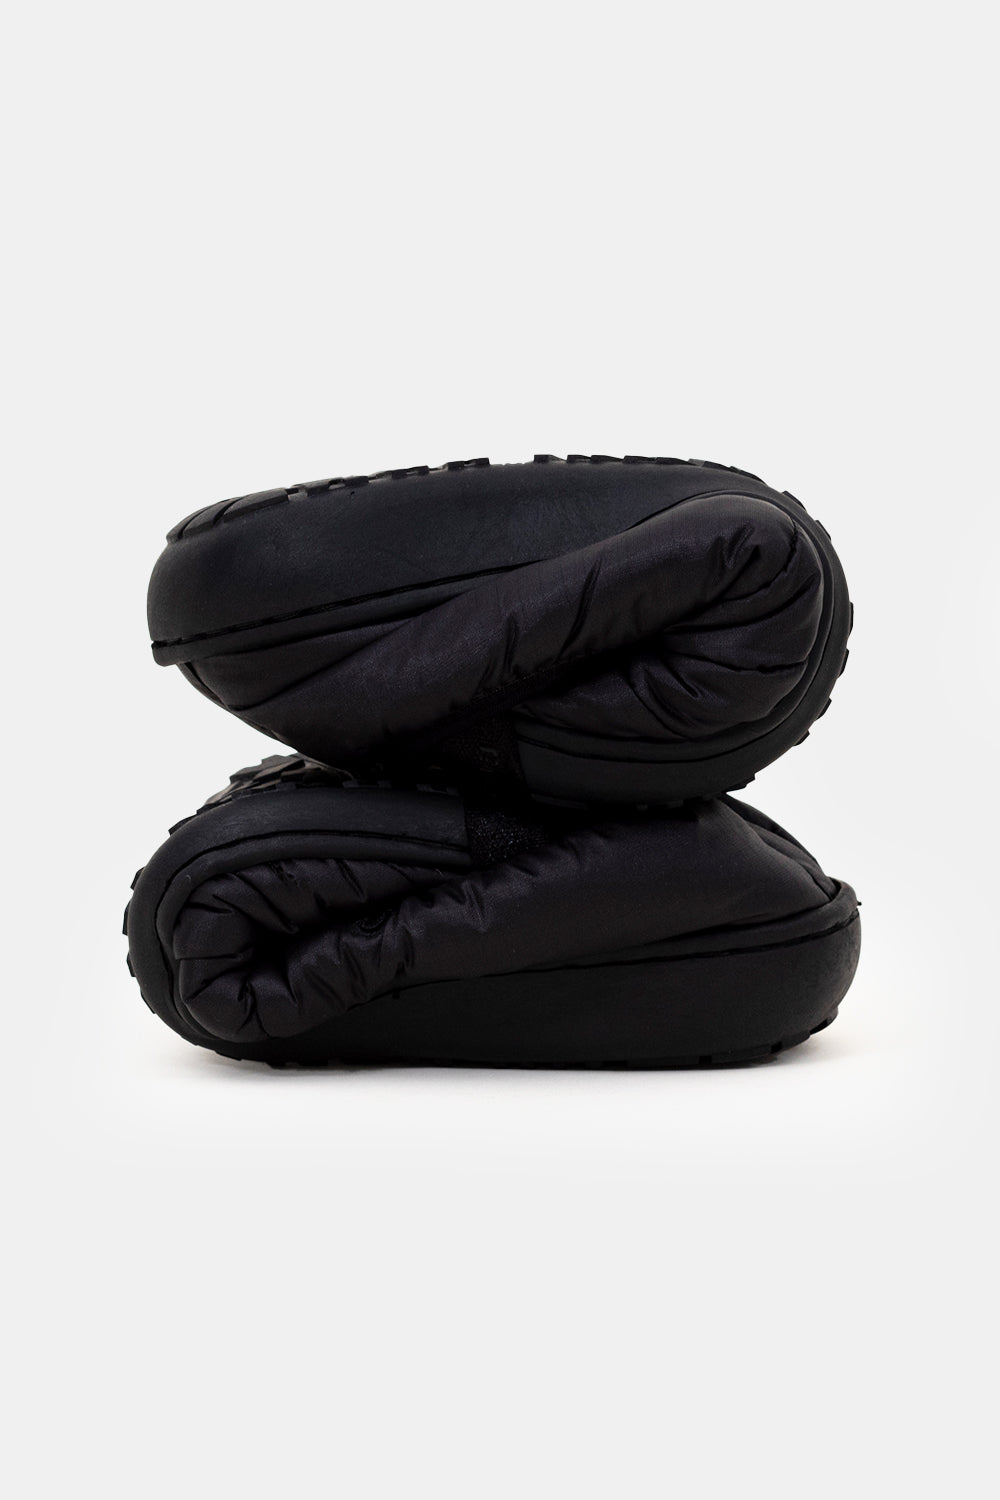 SUBU Indoor Outdoor Packable Slippers (Gloss Black)